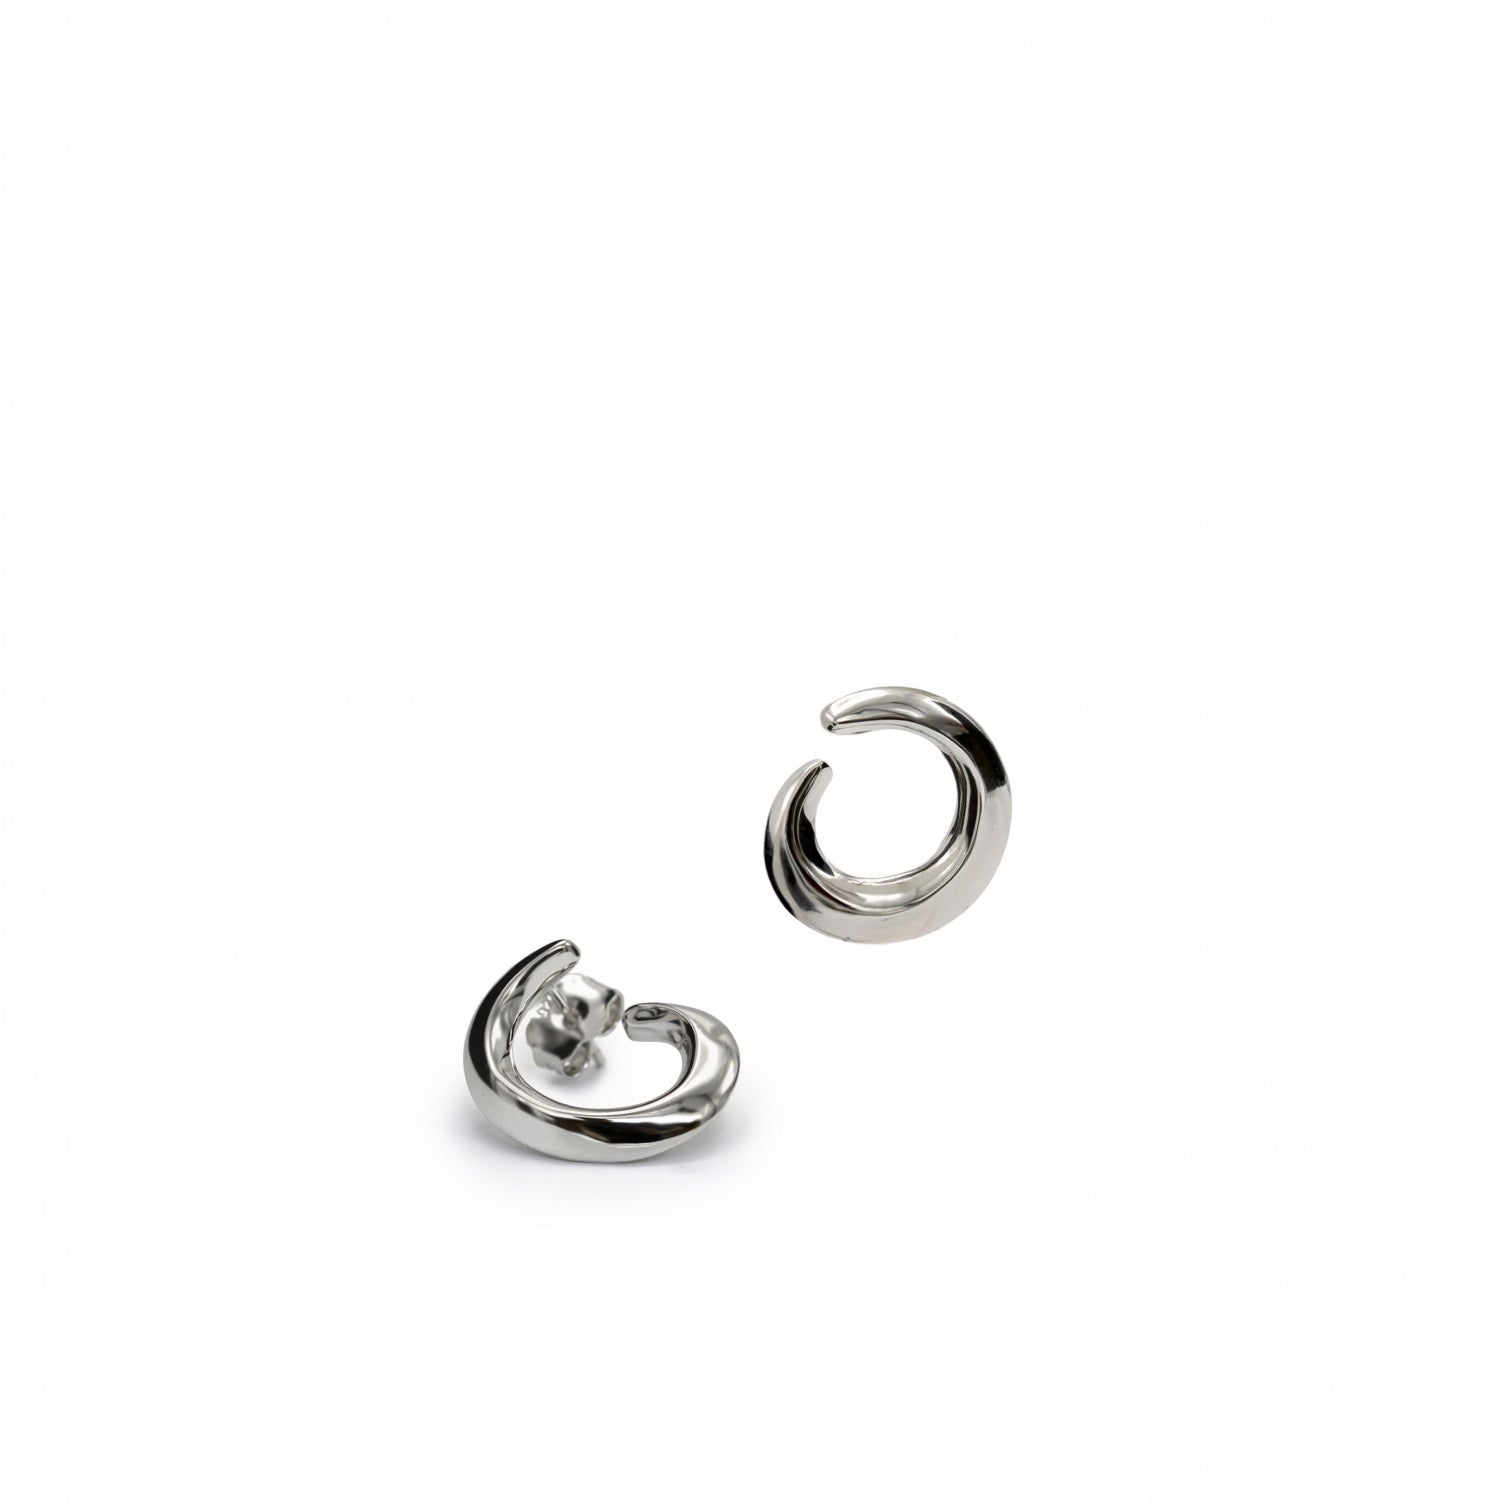 Earrings - Original earrings in silver with open circle motif irregular contour